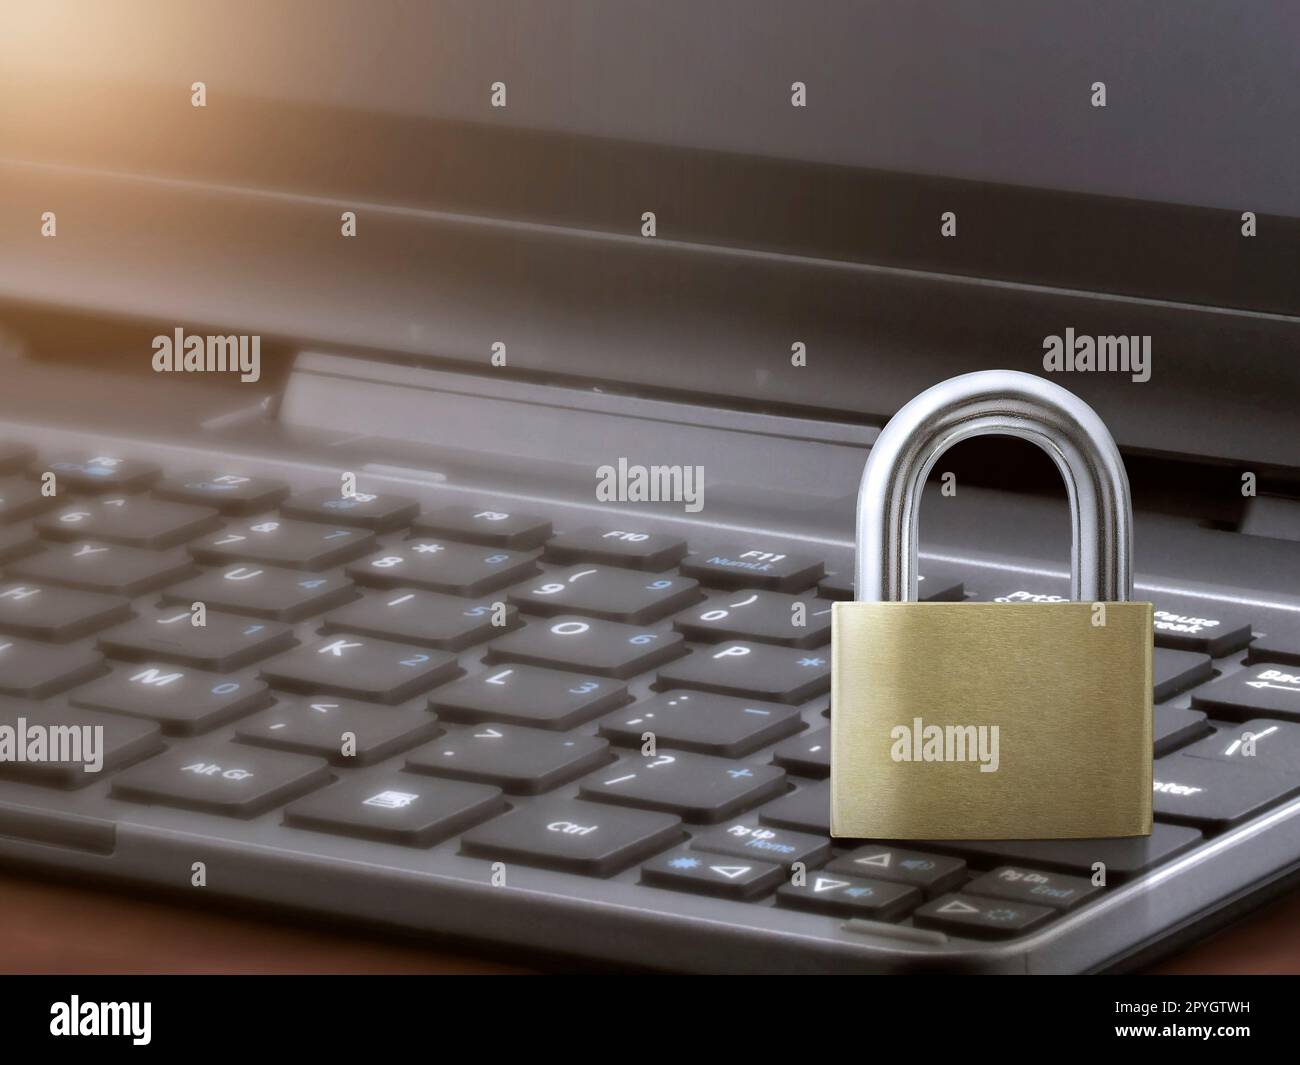 Computer security concept. Unlocked padlock on laptop keyboard. Stock Photo